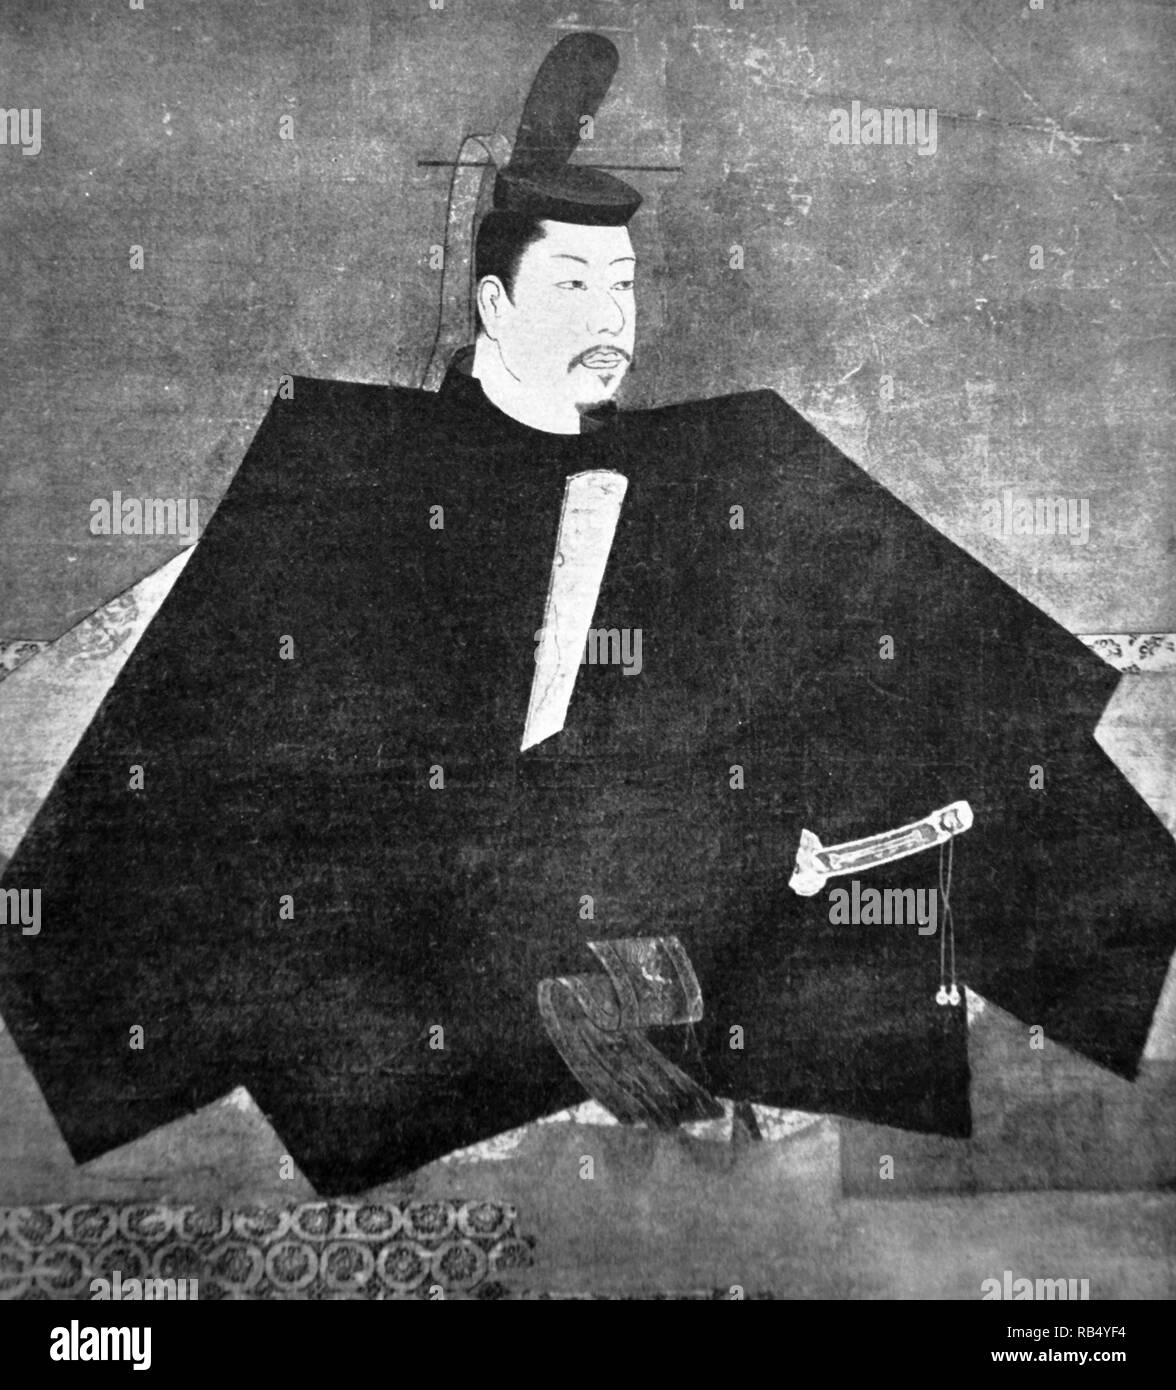 Minamoto no Yoritomo (1147-1199) was the founder and the first shogun of the Kamakura Shogunate of Japan. He ruled from 1192 until 1199. Stock Photo